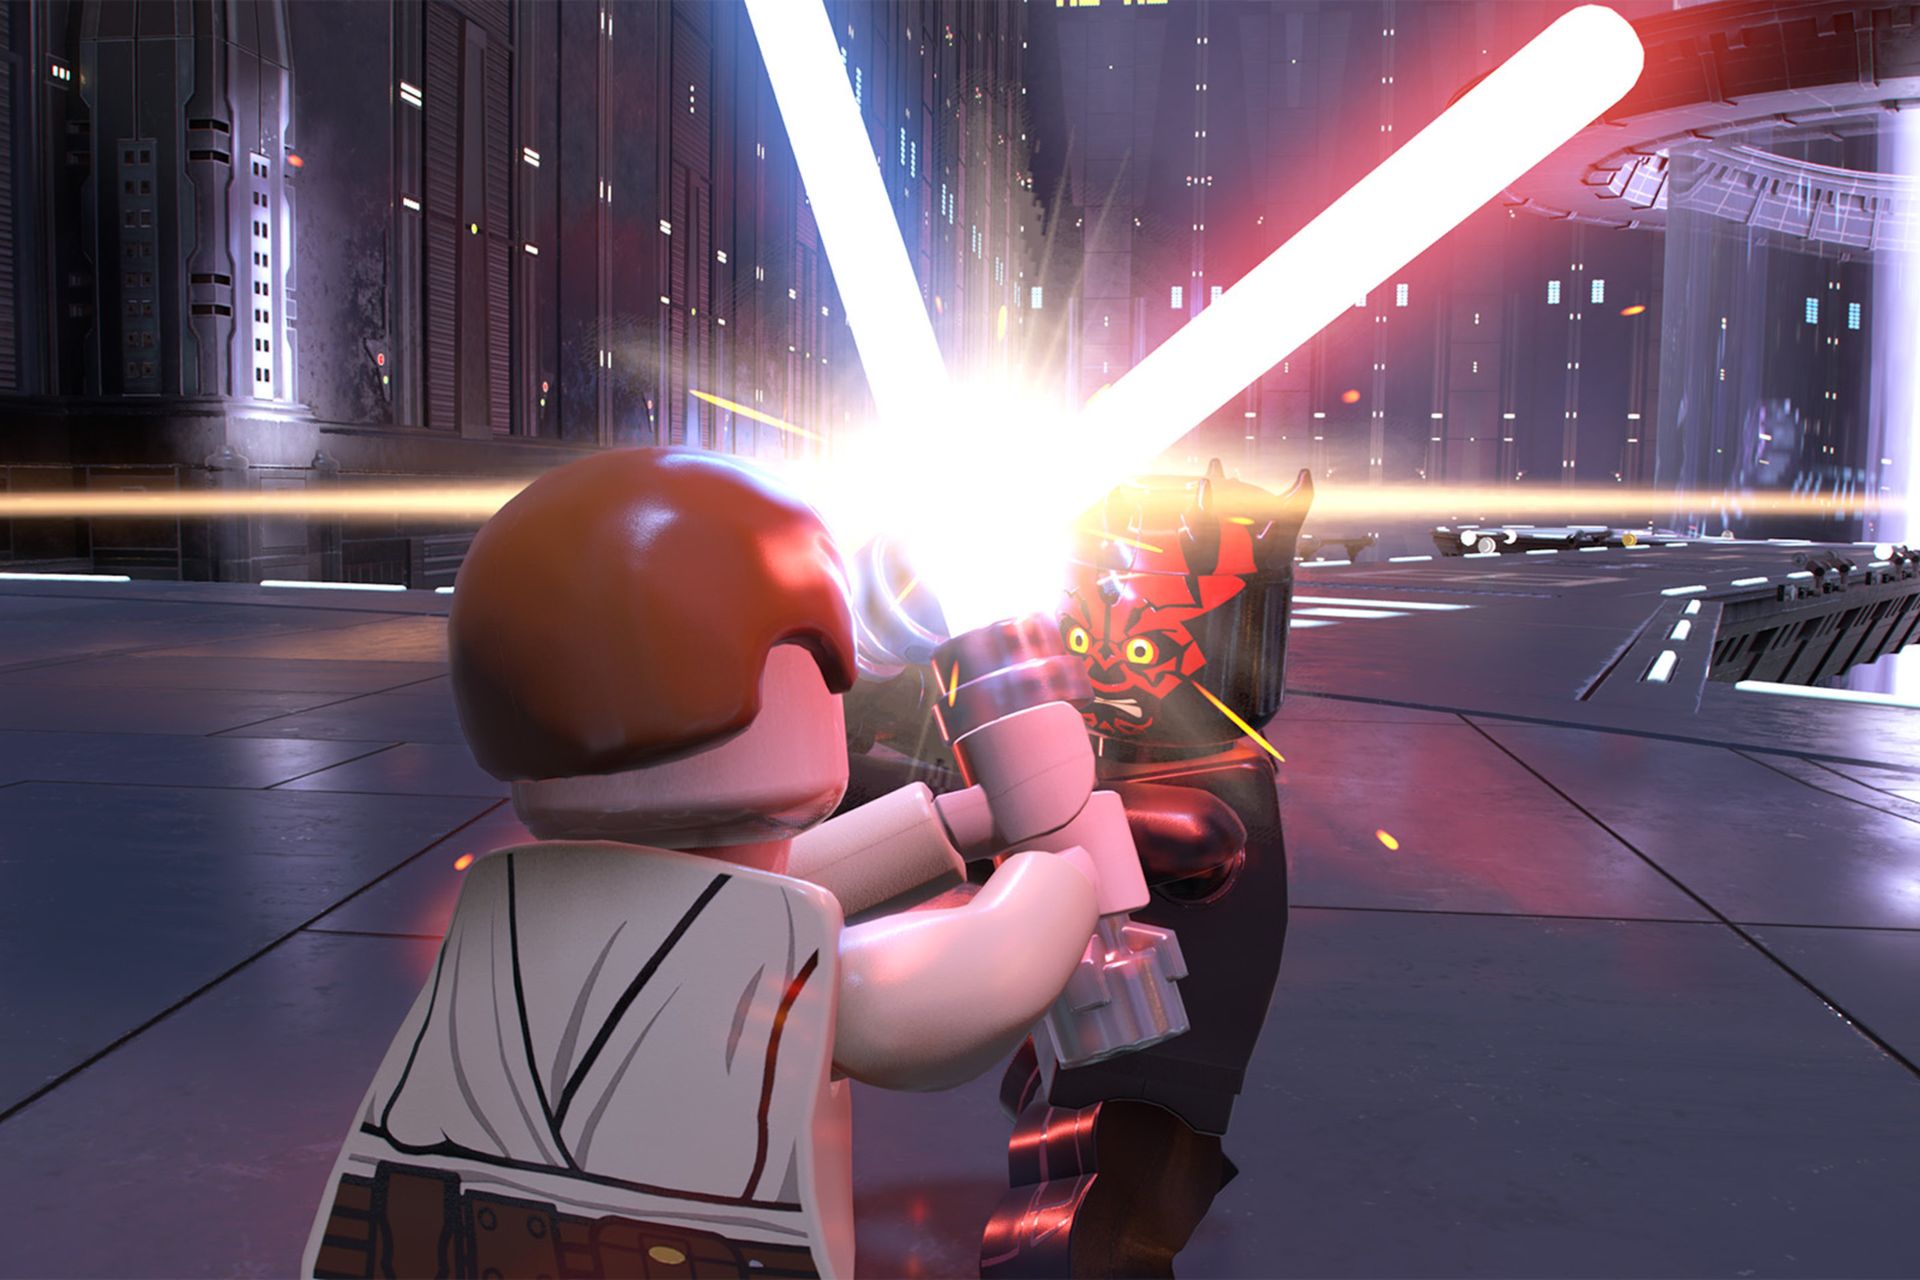 Lego Star Wars settings